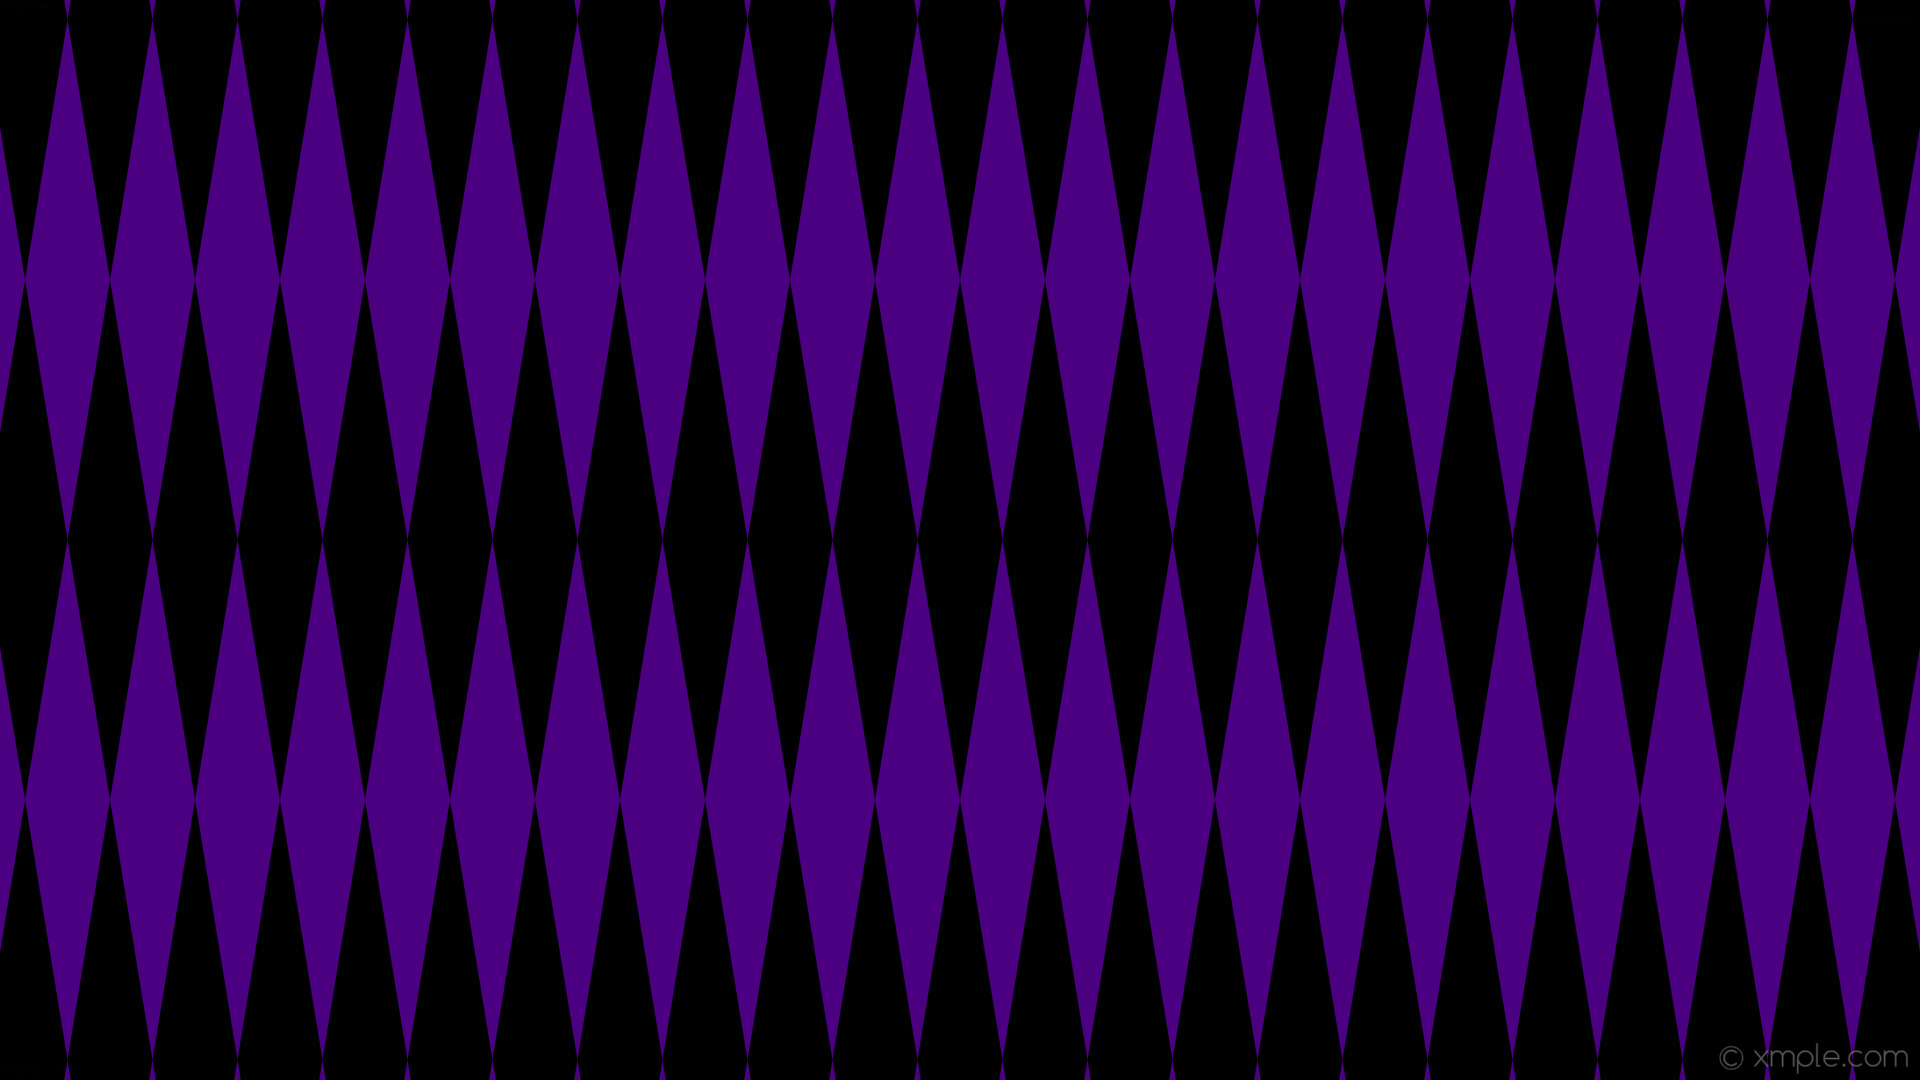 1920x1080 wallpaper lozenge black purple diamond rhombus indigo #000000 #4b0082 90Â°  520px 85px